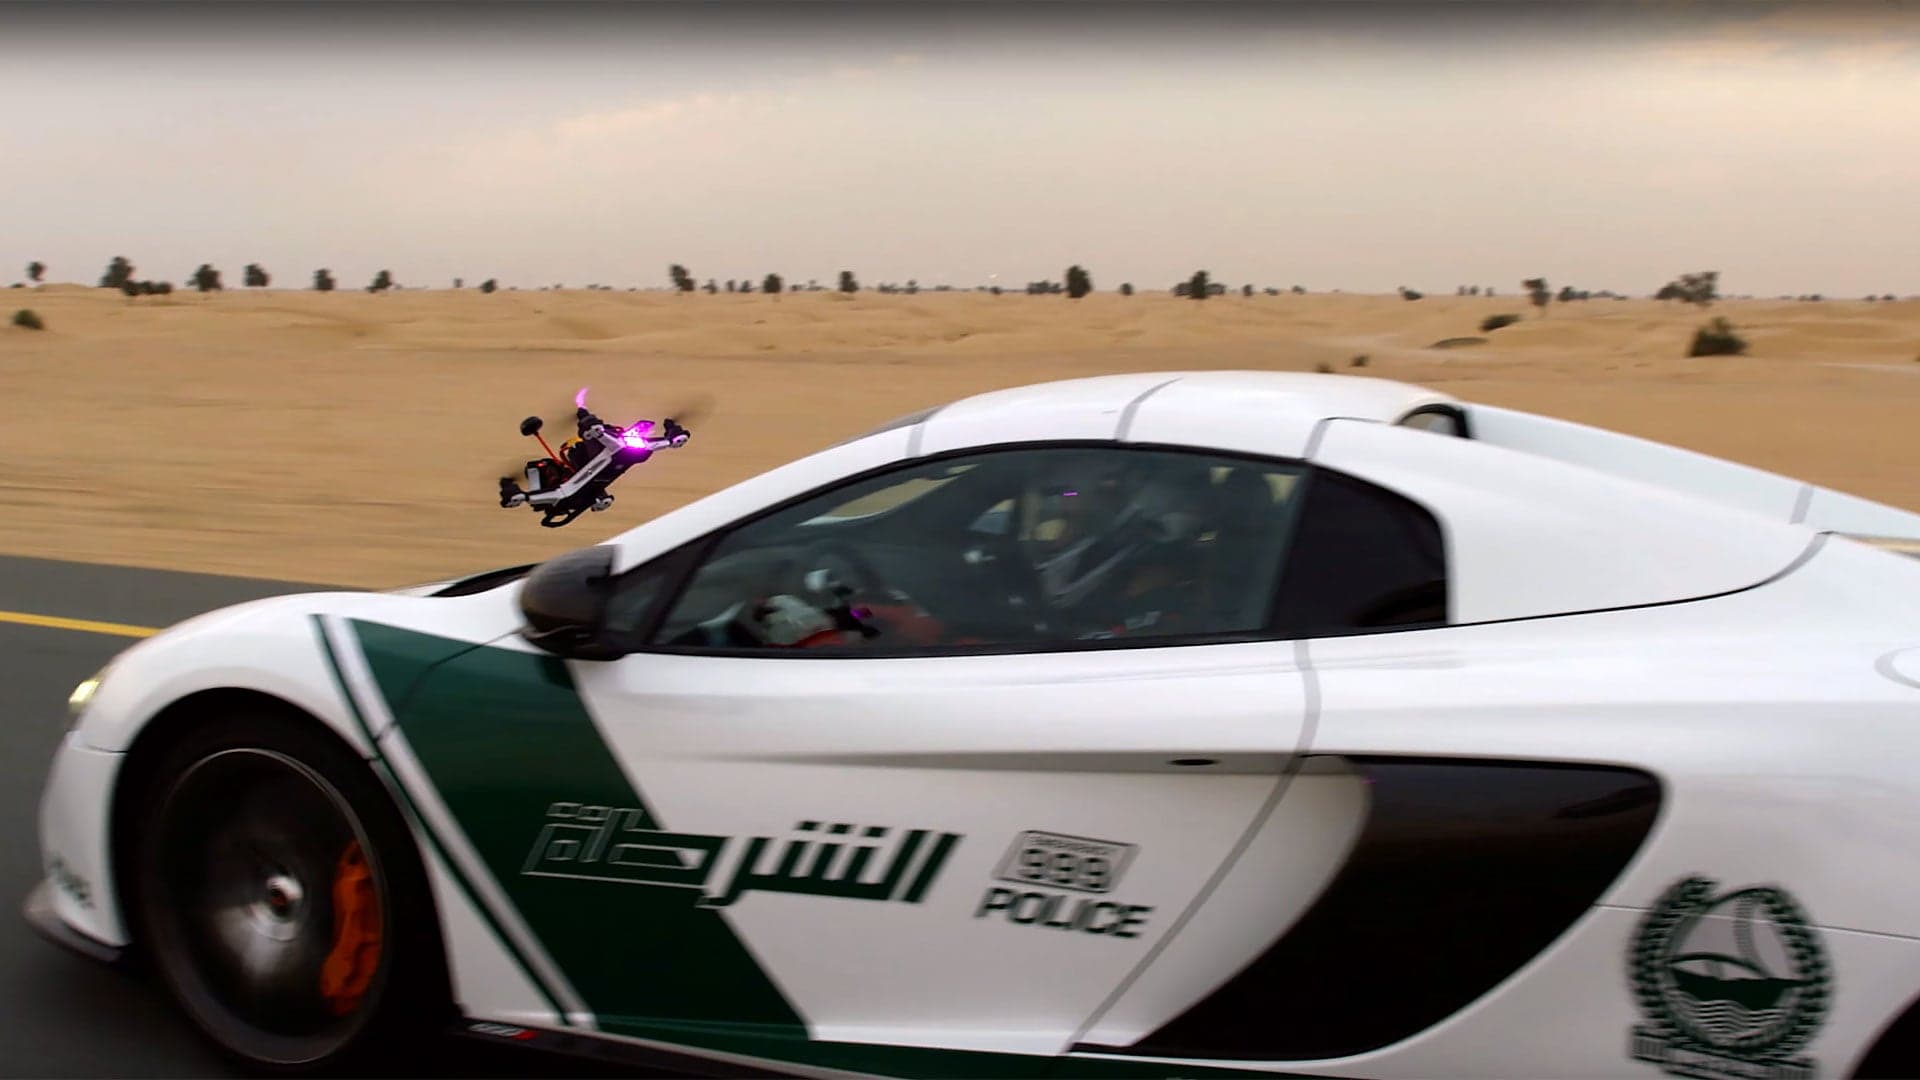 Watch This McLaren 650S Race a Drone Through Dubai